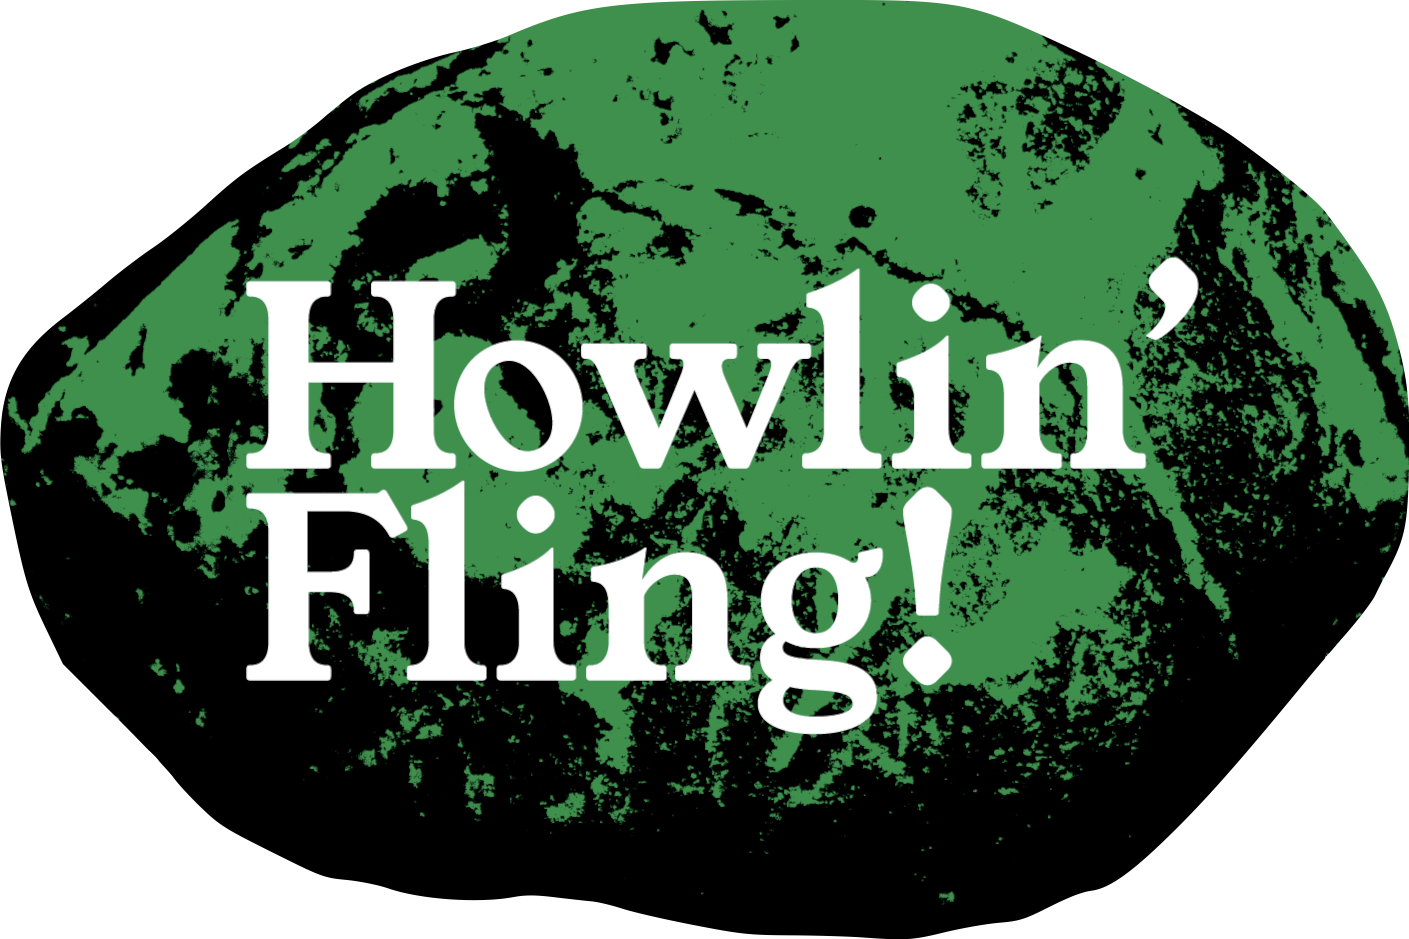 Howlin&#39; Fling!